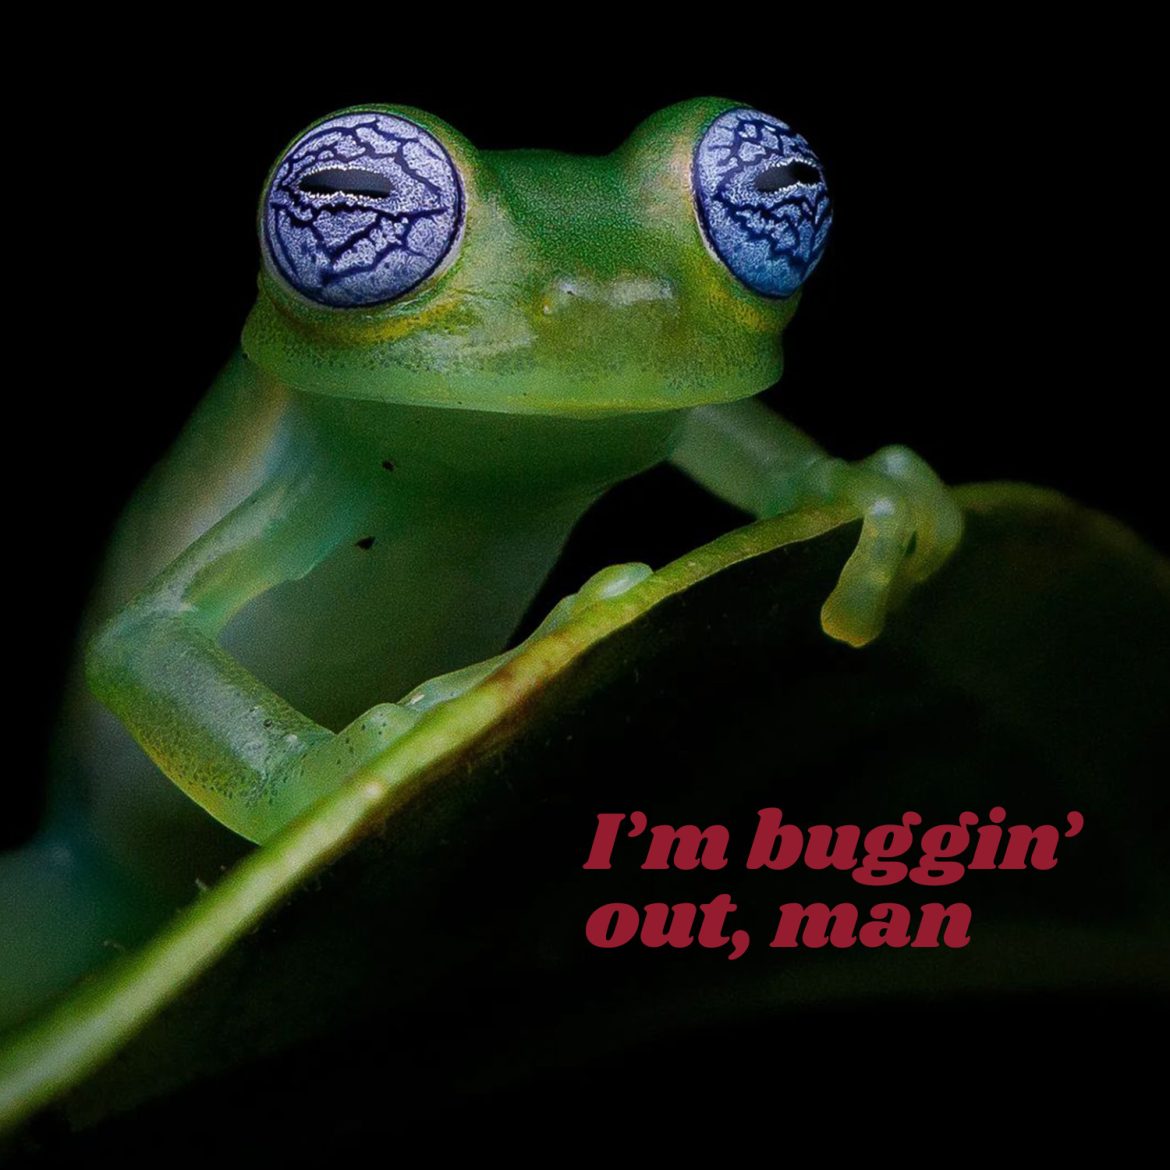 I’m buggin’ out, man